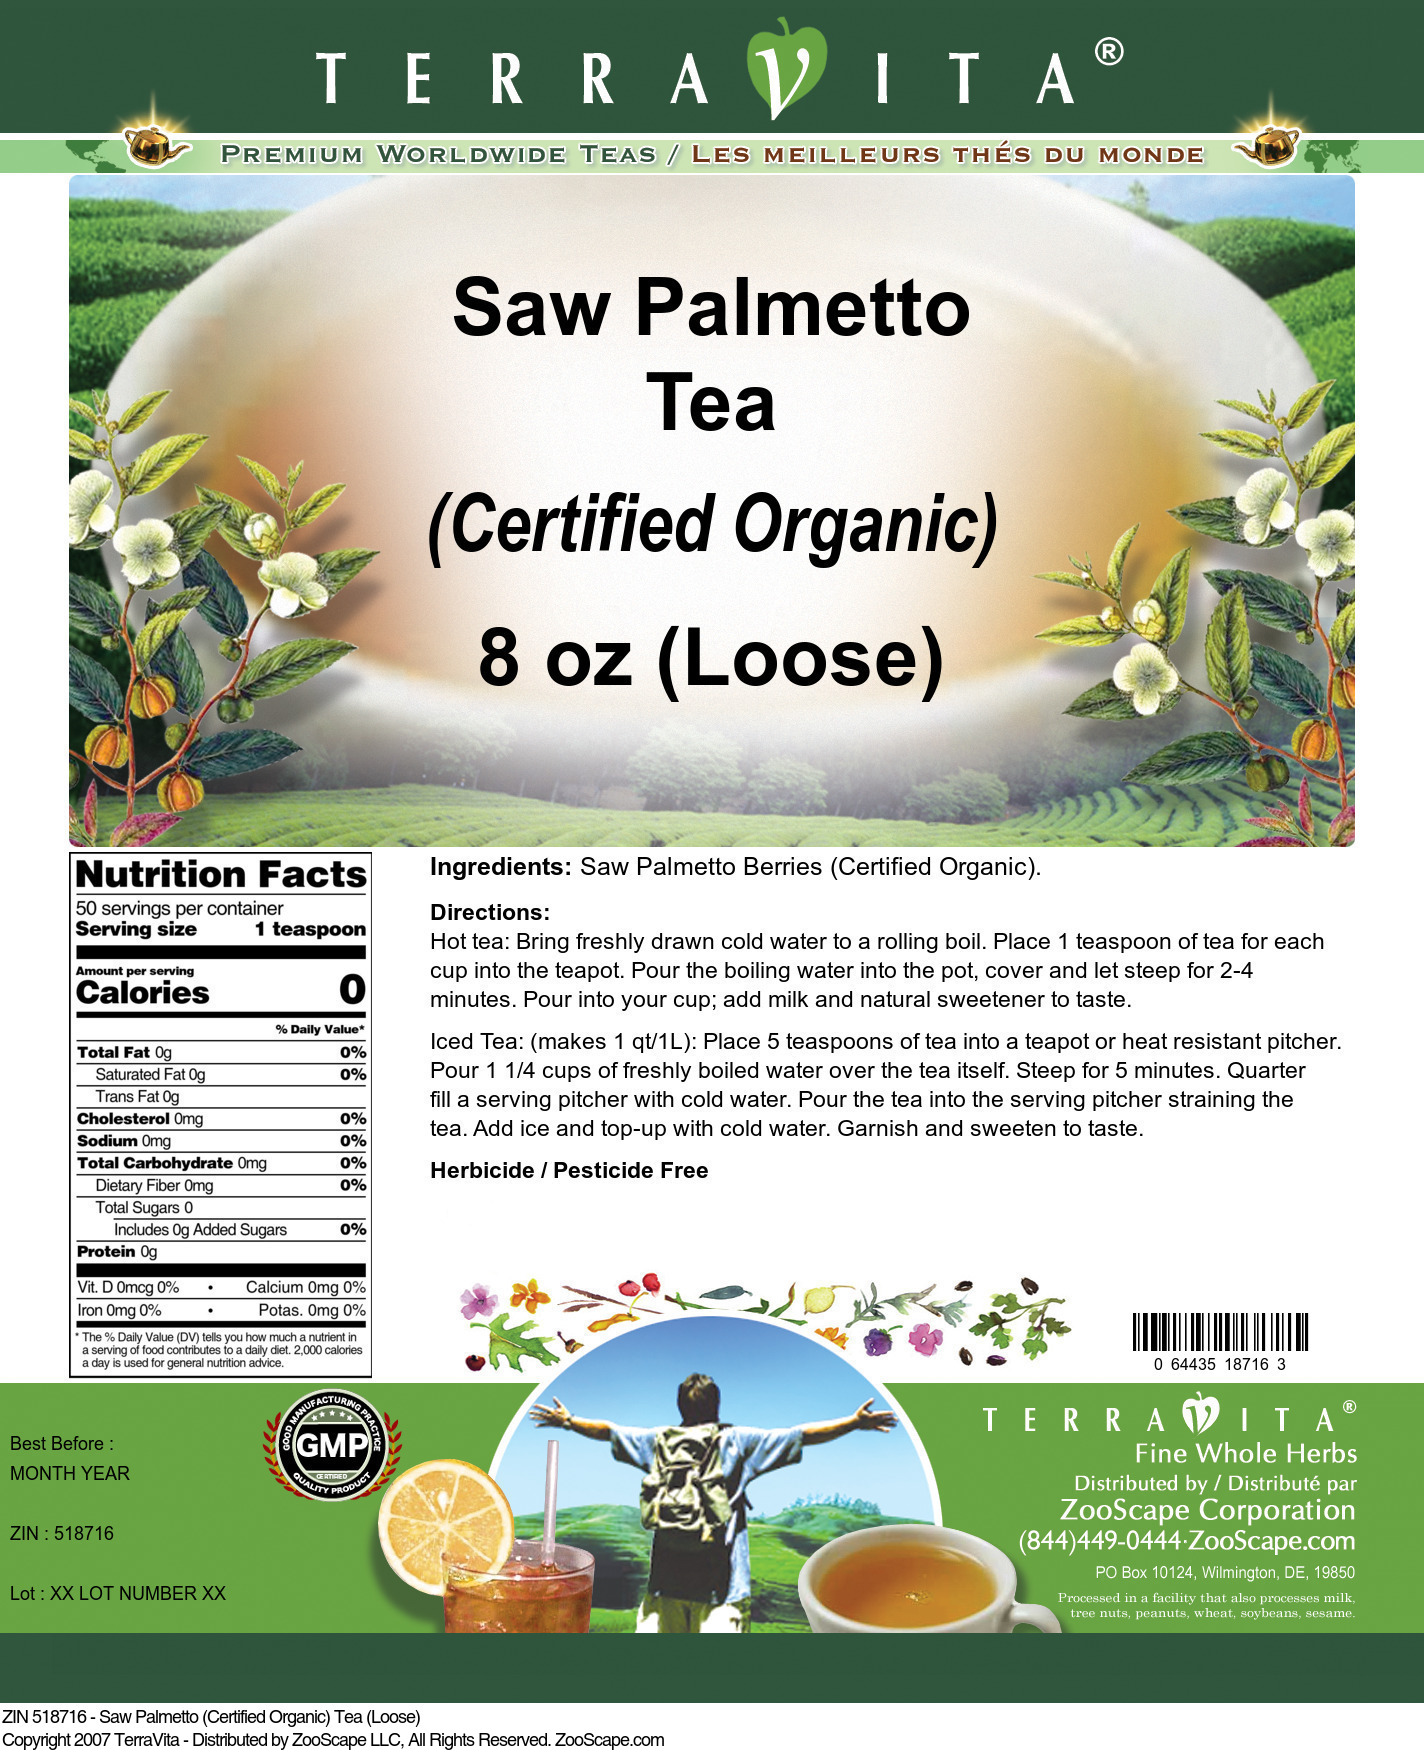 Saw Palmetto (Certified Organic) Tea (Loose) - Label